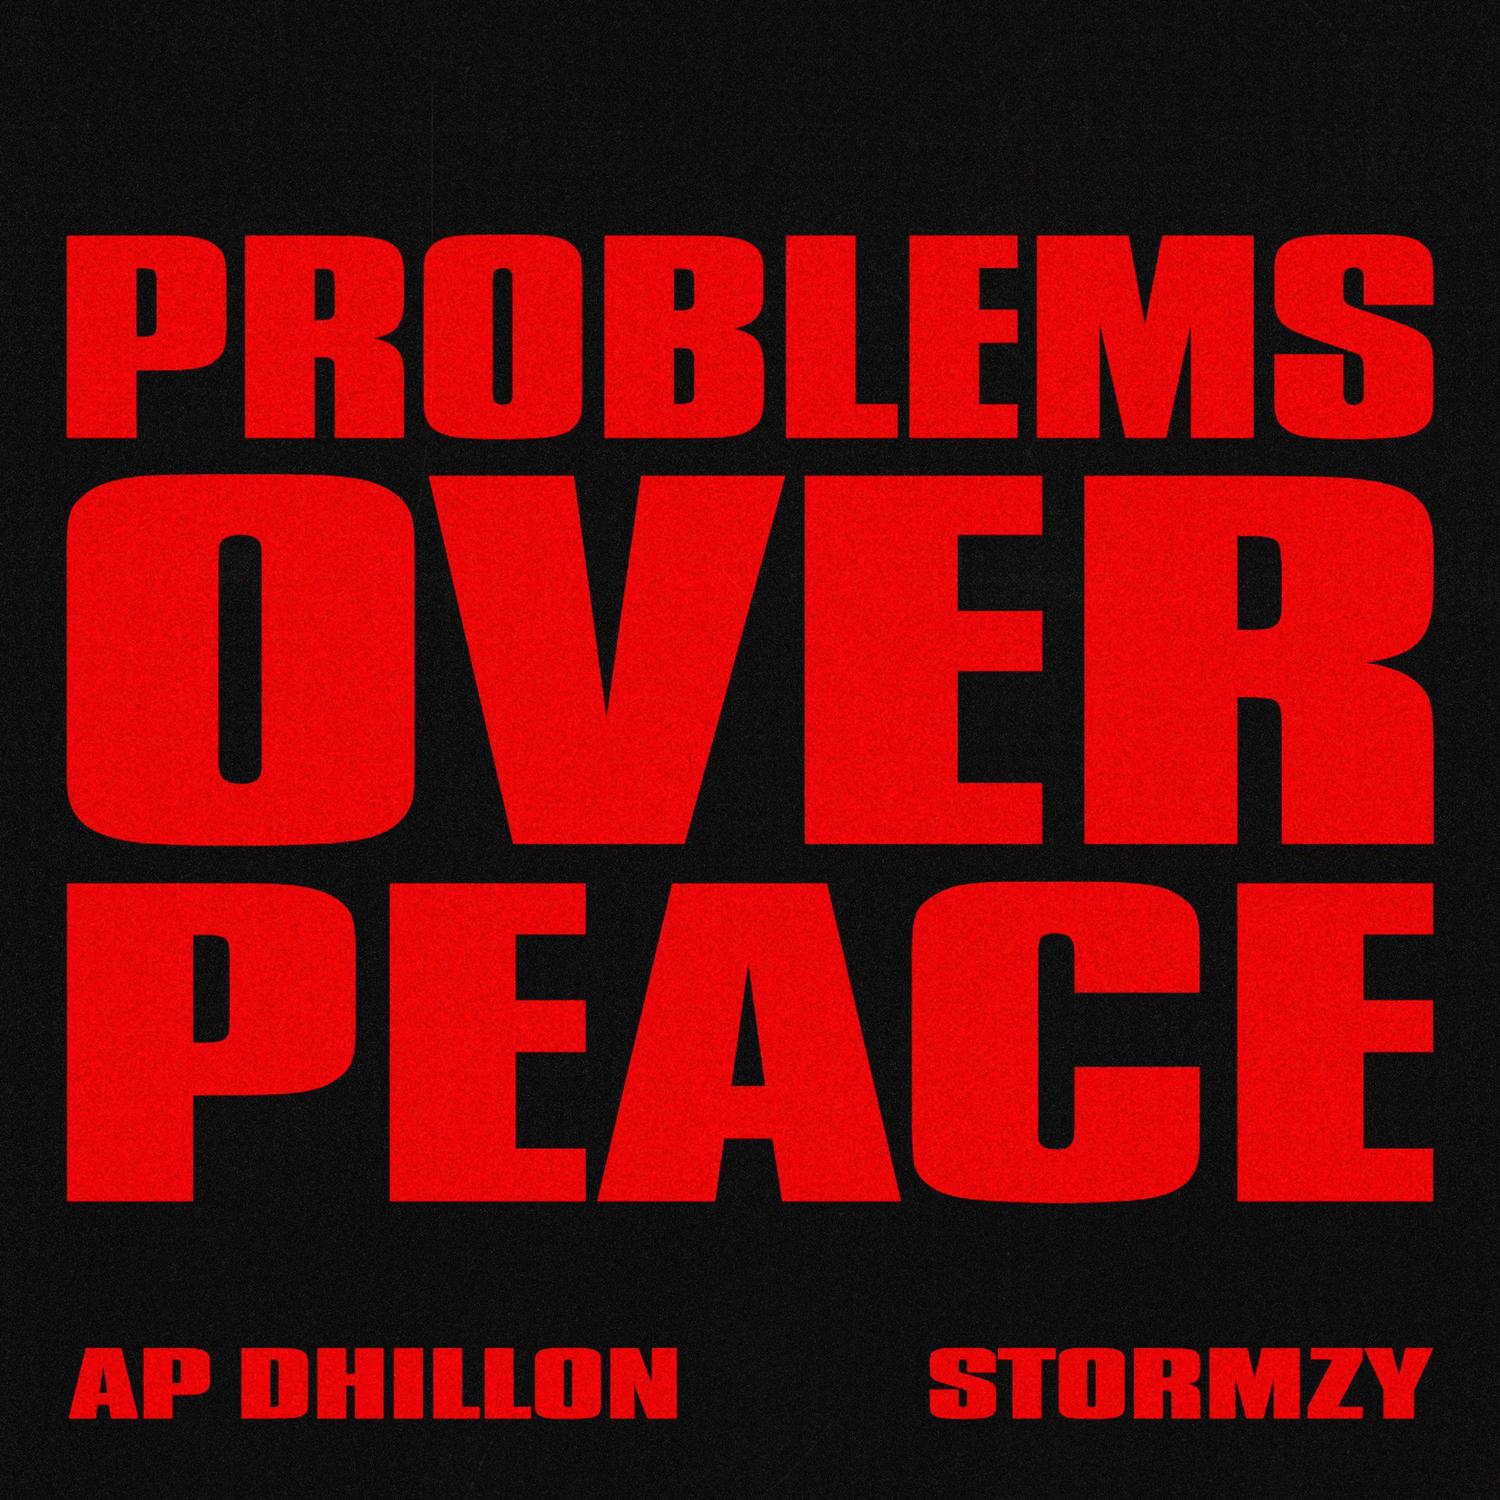 AP Dhillon - Problems Over Peace